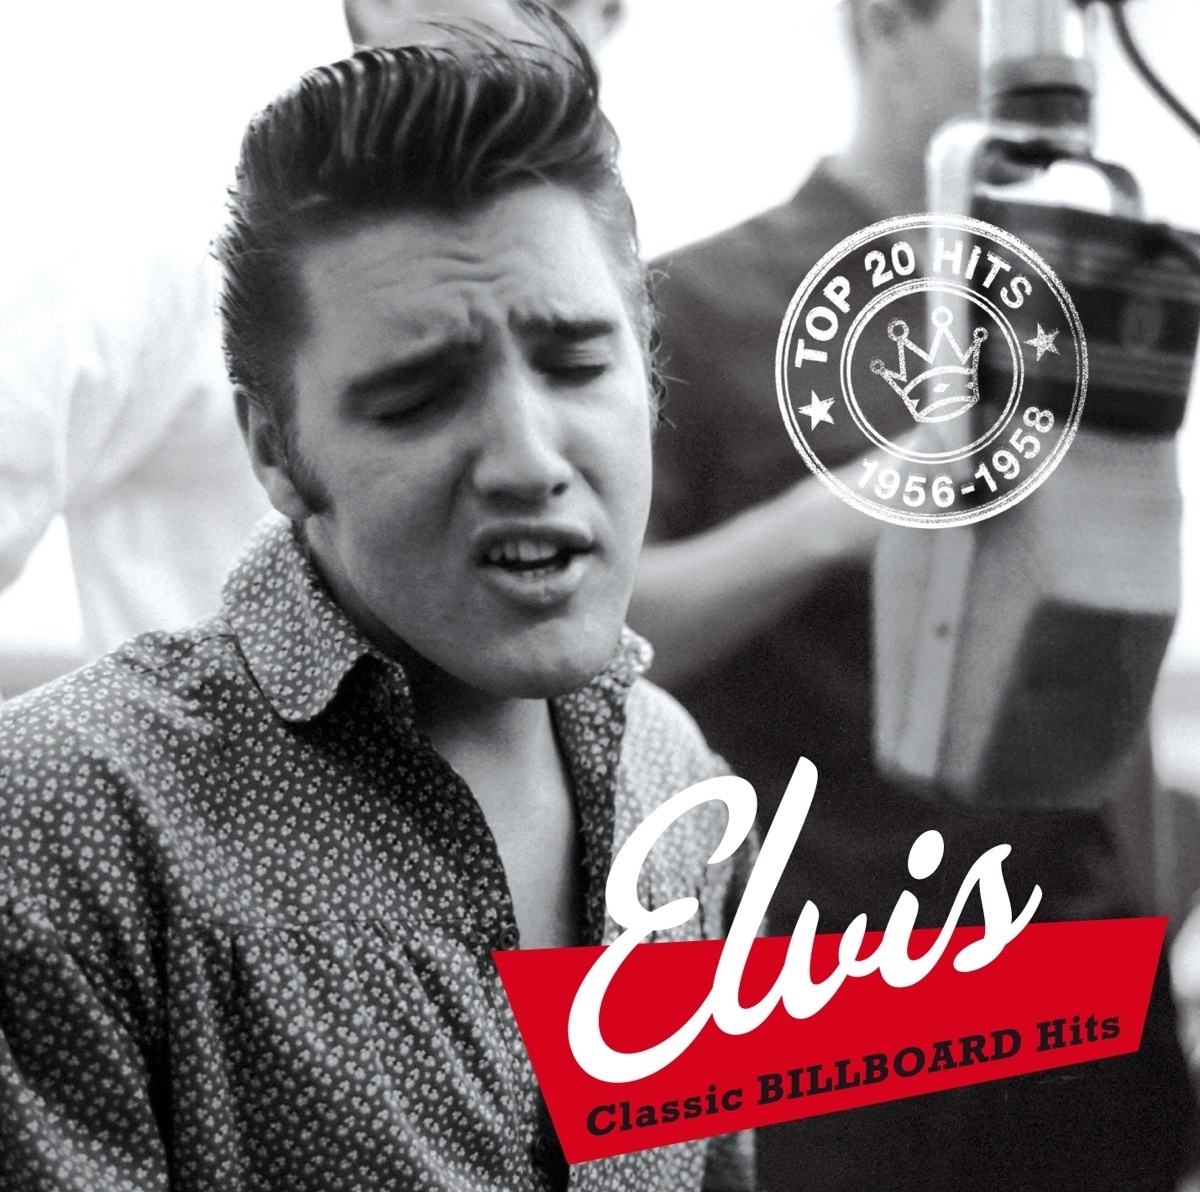 Classic Billboard Hits - Elvis Presley. (CD)